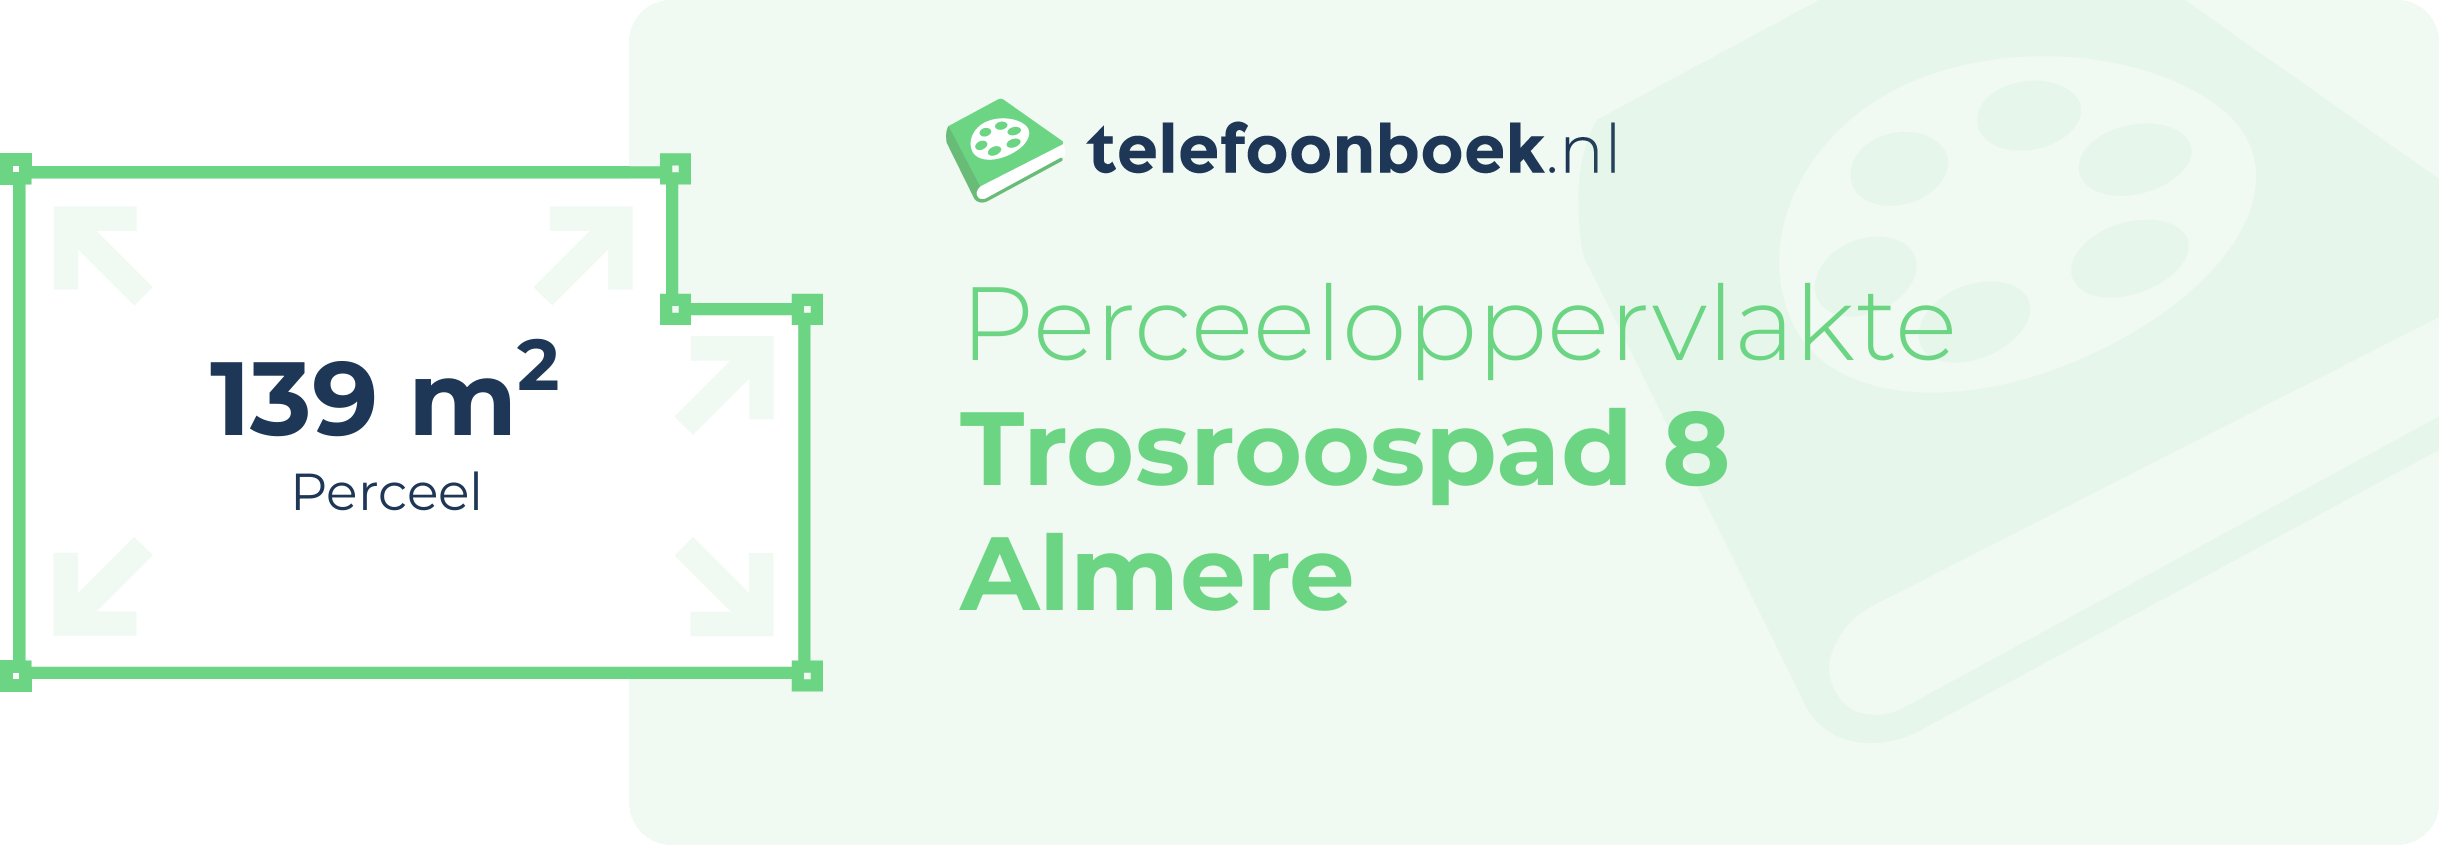 Perceeloppervlakte Trosroospad 8 Almere